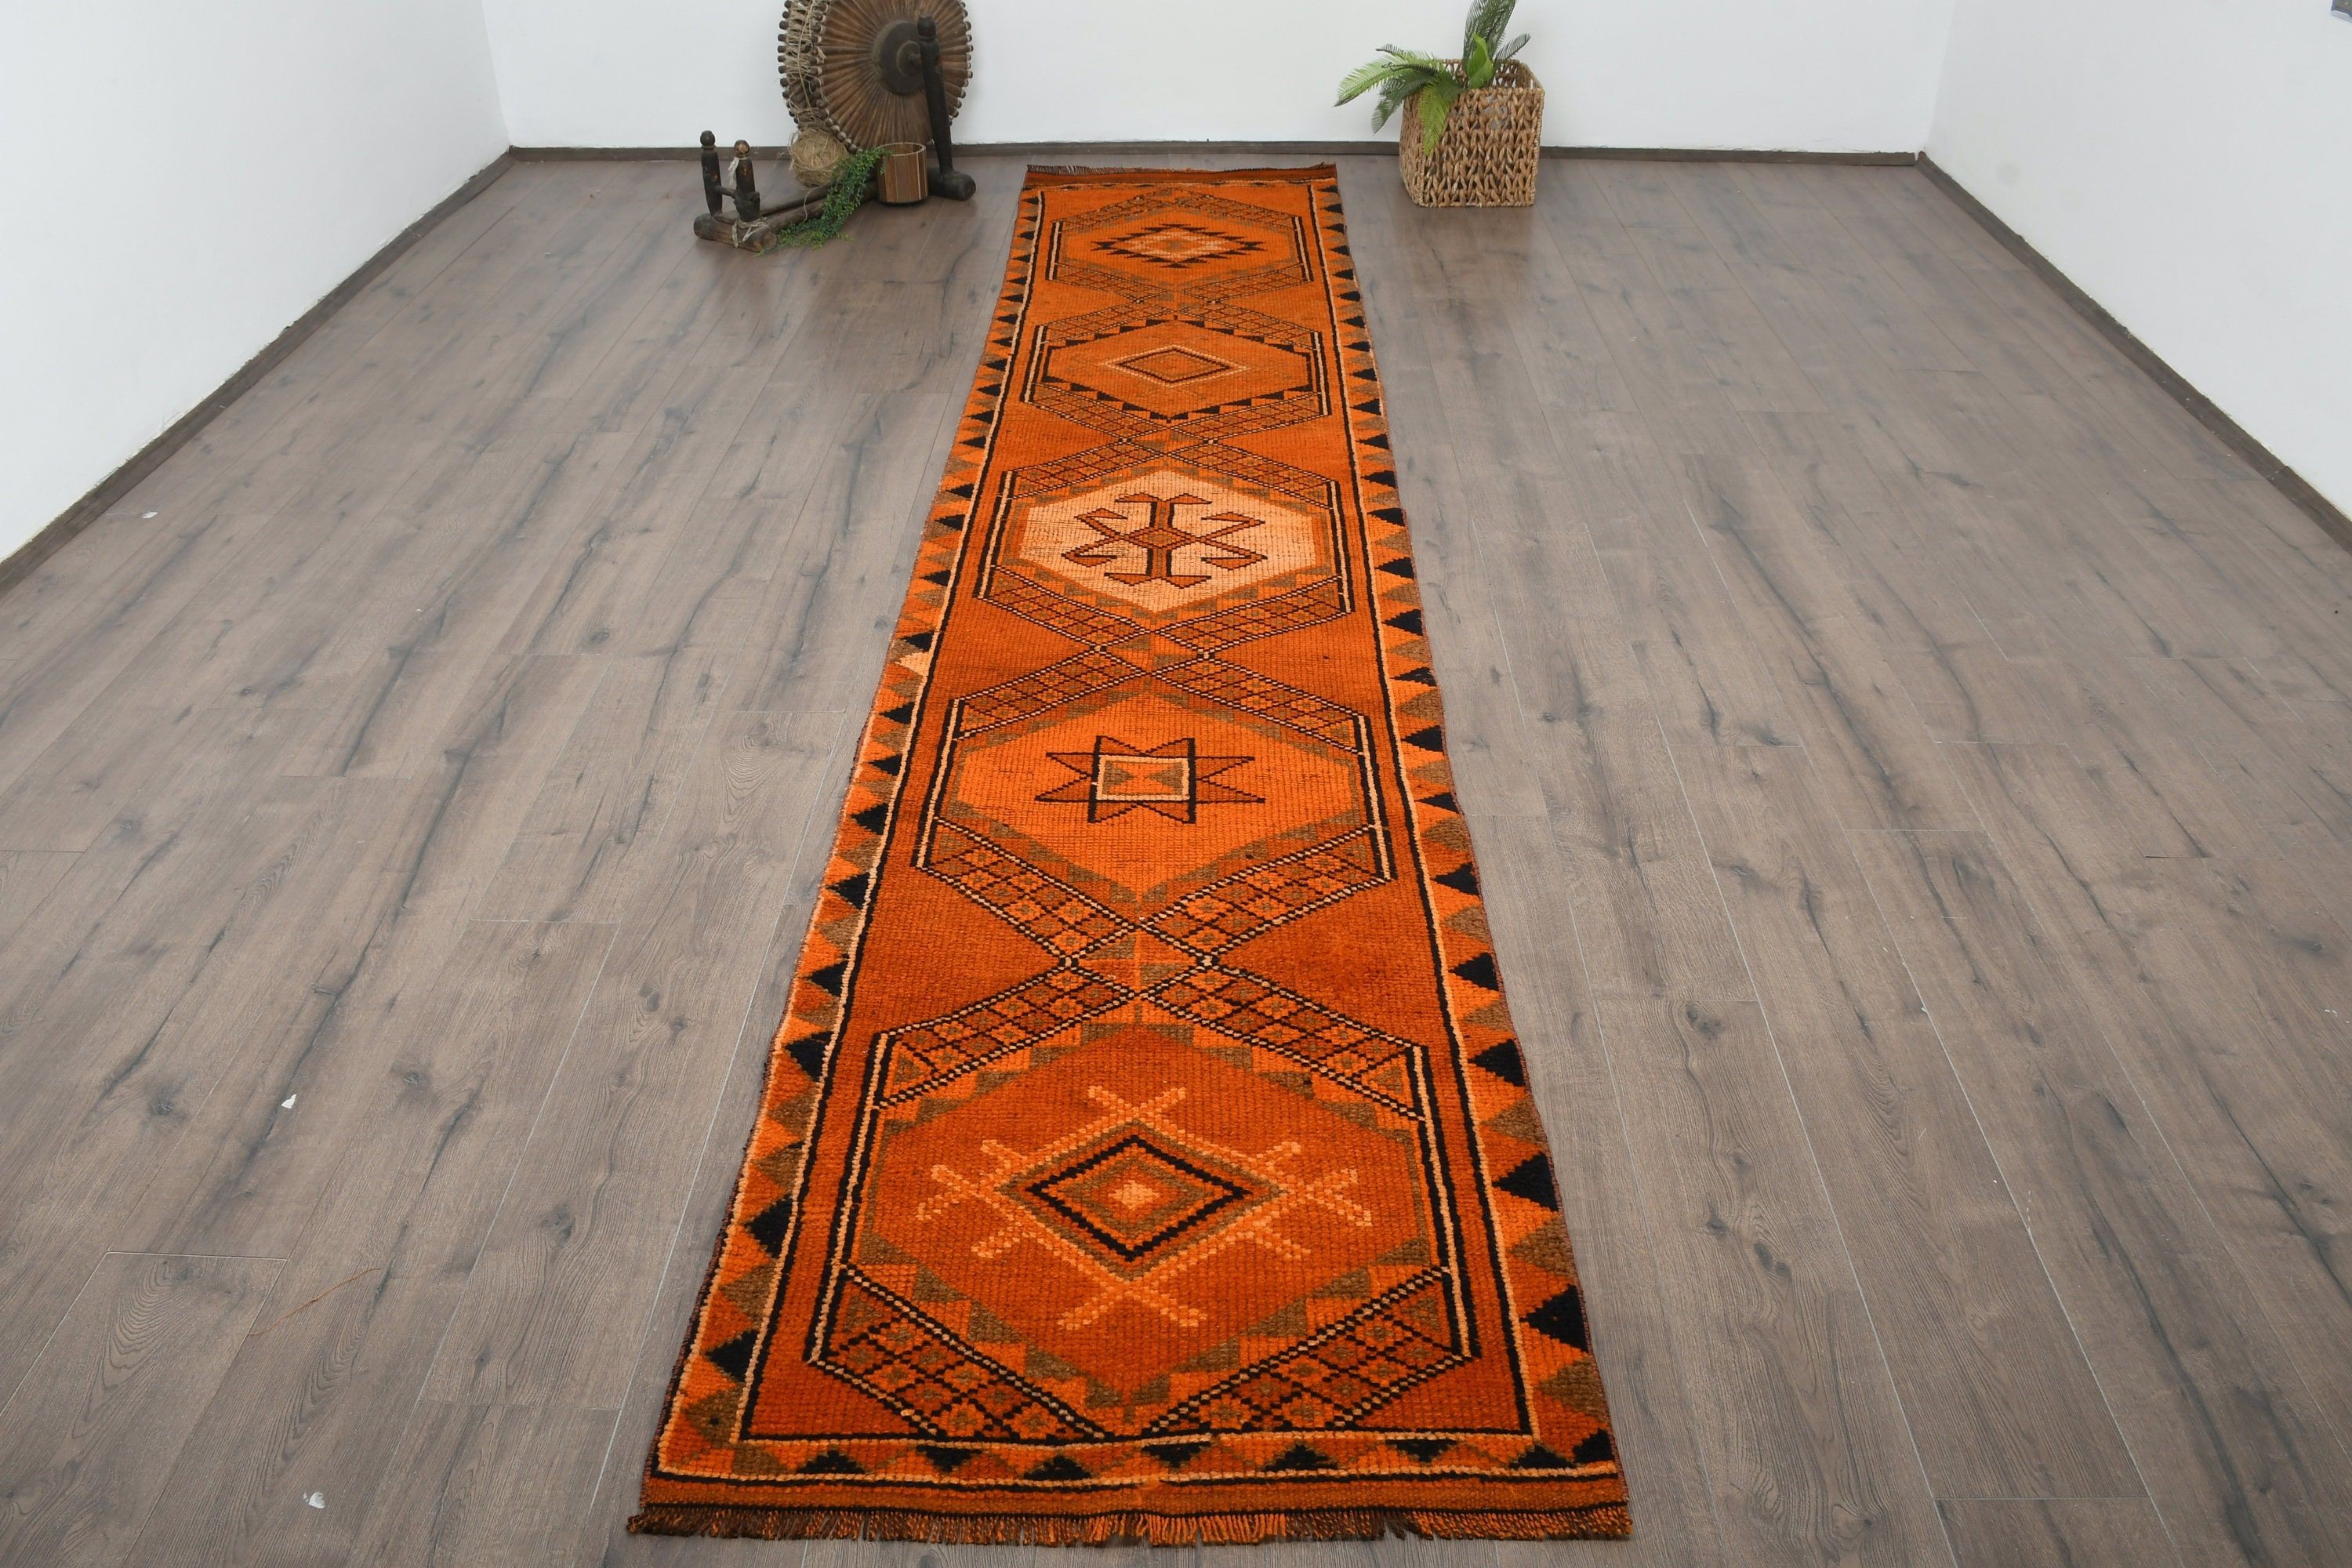 Moroccan Rugs, Boho Rug, Orange Antique Rug, Bedroom Rugs, Rugs for Kitchen, 2.7x13.3 ft Runner Rug, Turkish Rug, Vintage Rug, Hallway Rugs